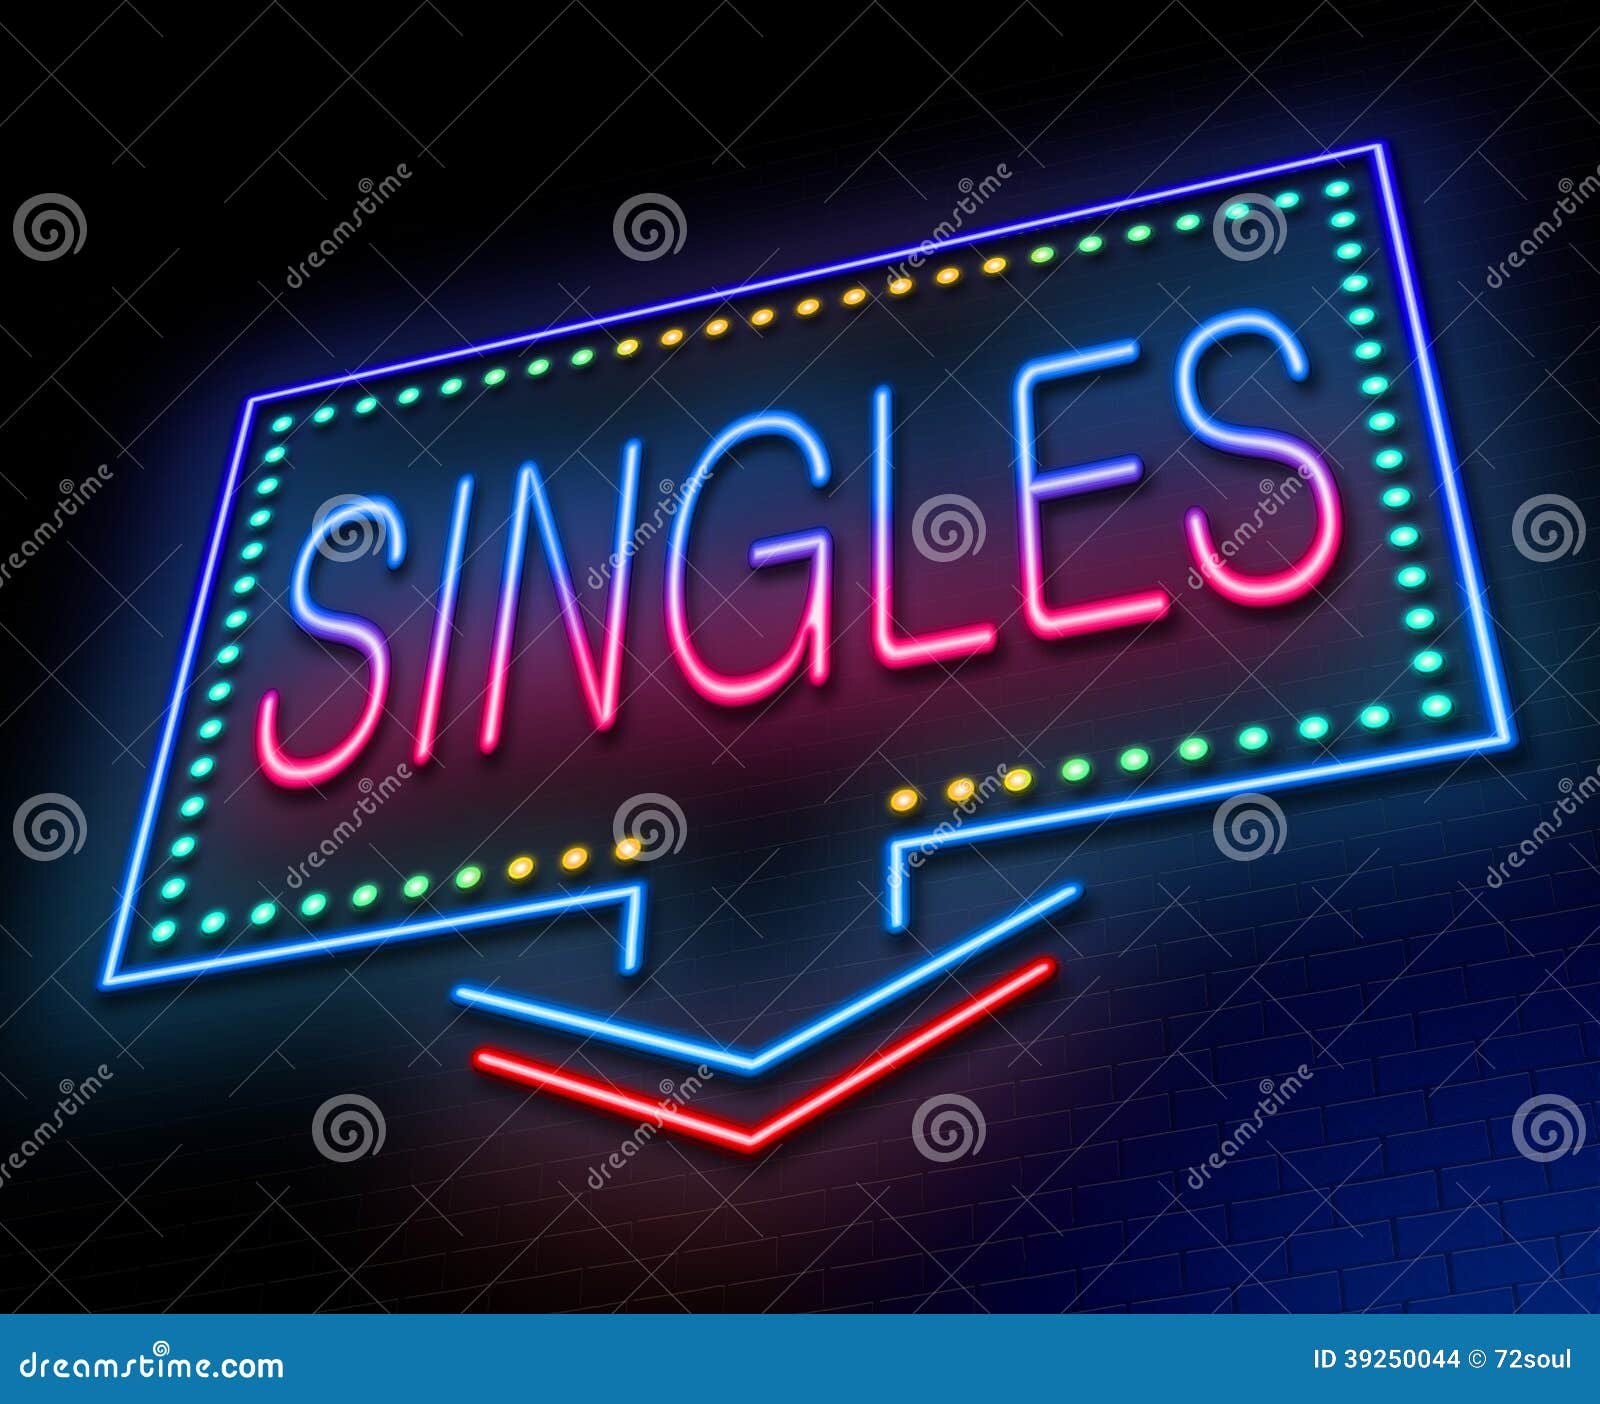 singles concept.